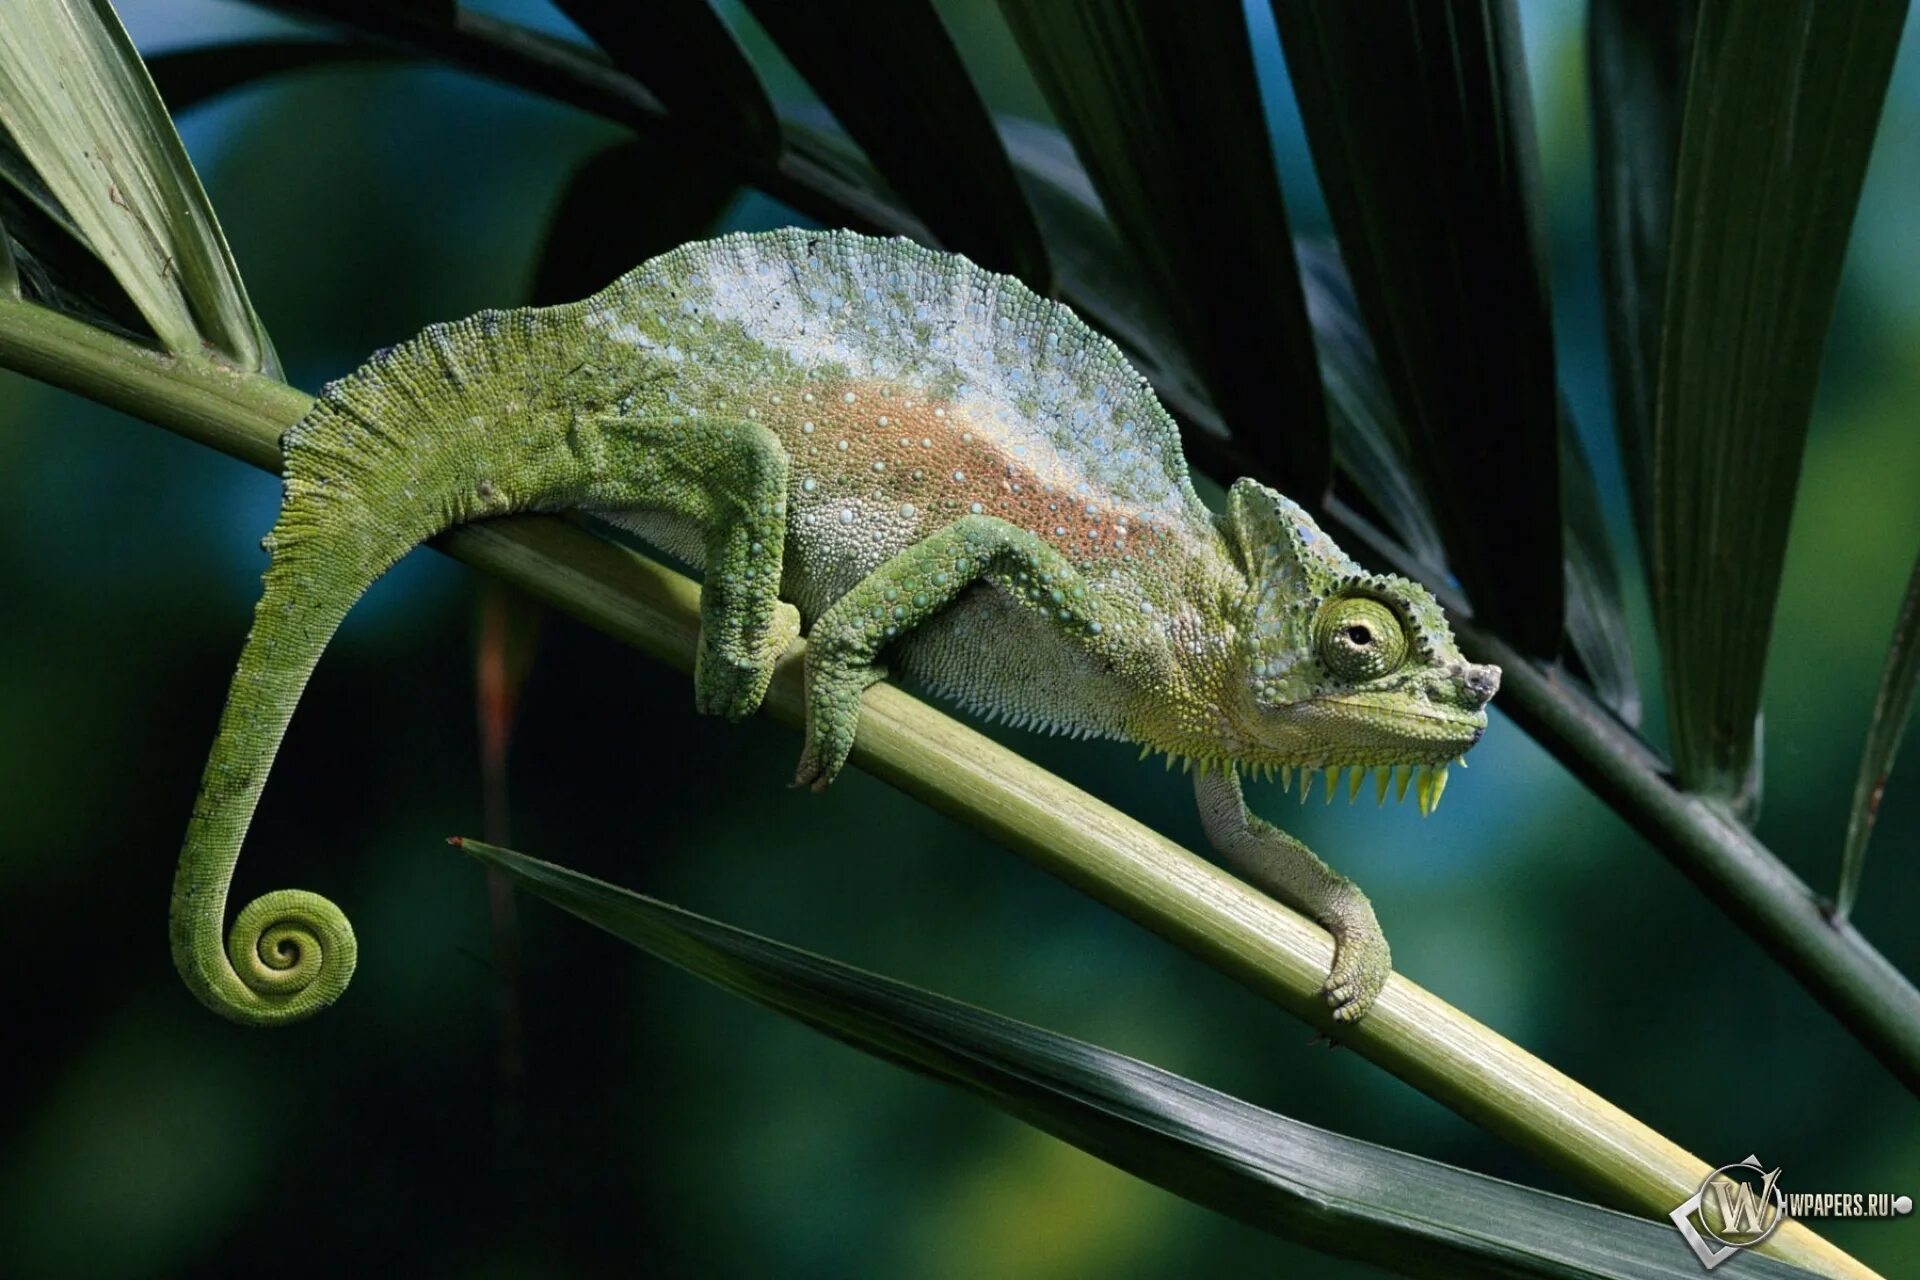 Х хамелеон. Агама ящерица Летучий дракон. Бразильский карликовый геккон. Четырехрогий хамелеон. Гребешковый хамелеон.